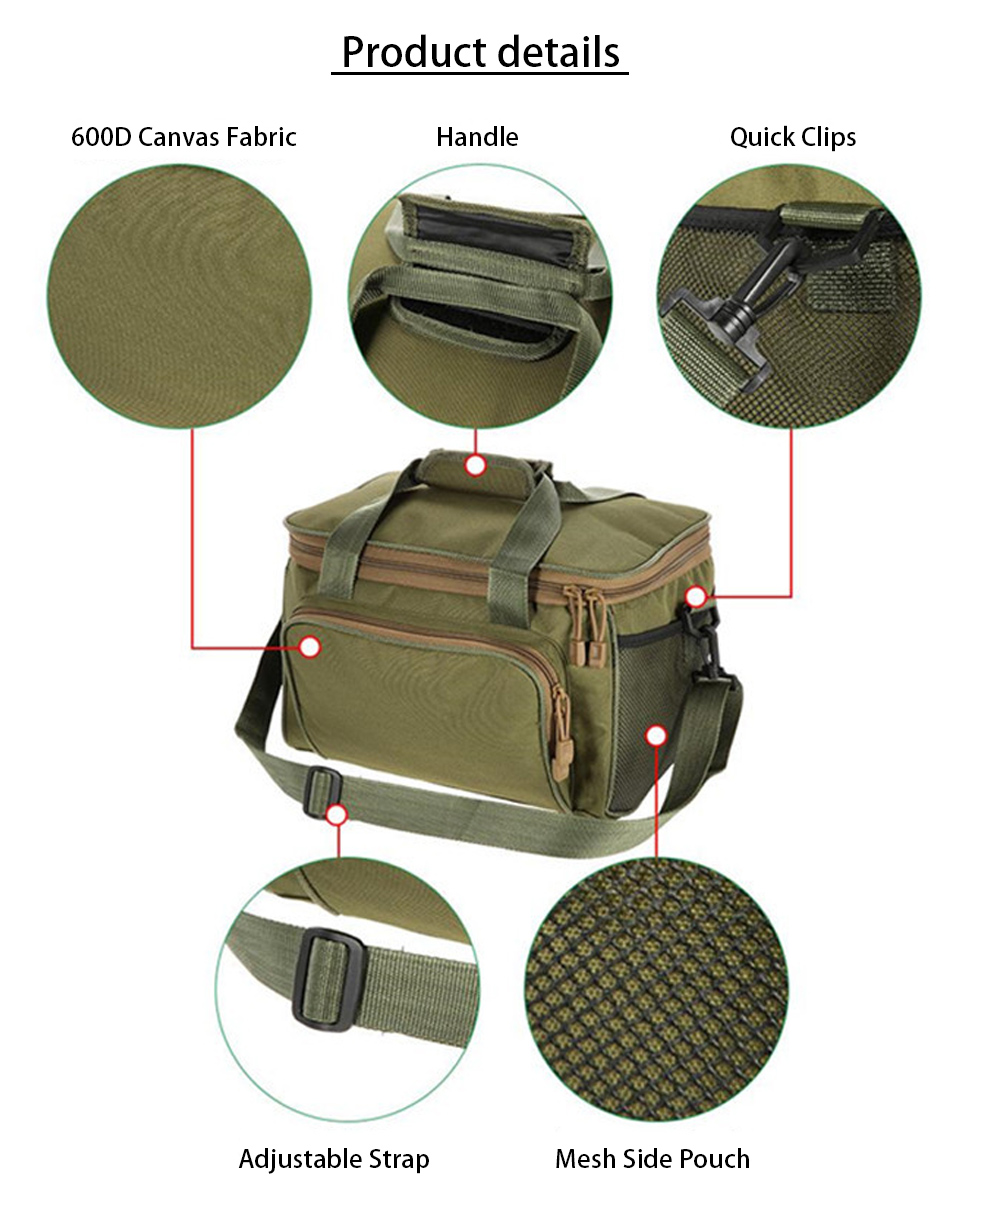 Portable Multifunctional Canvas Fishing Shoulder Bag